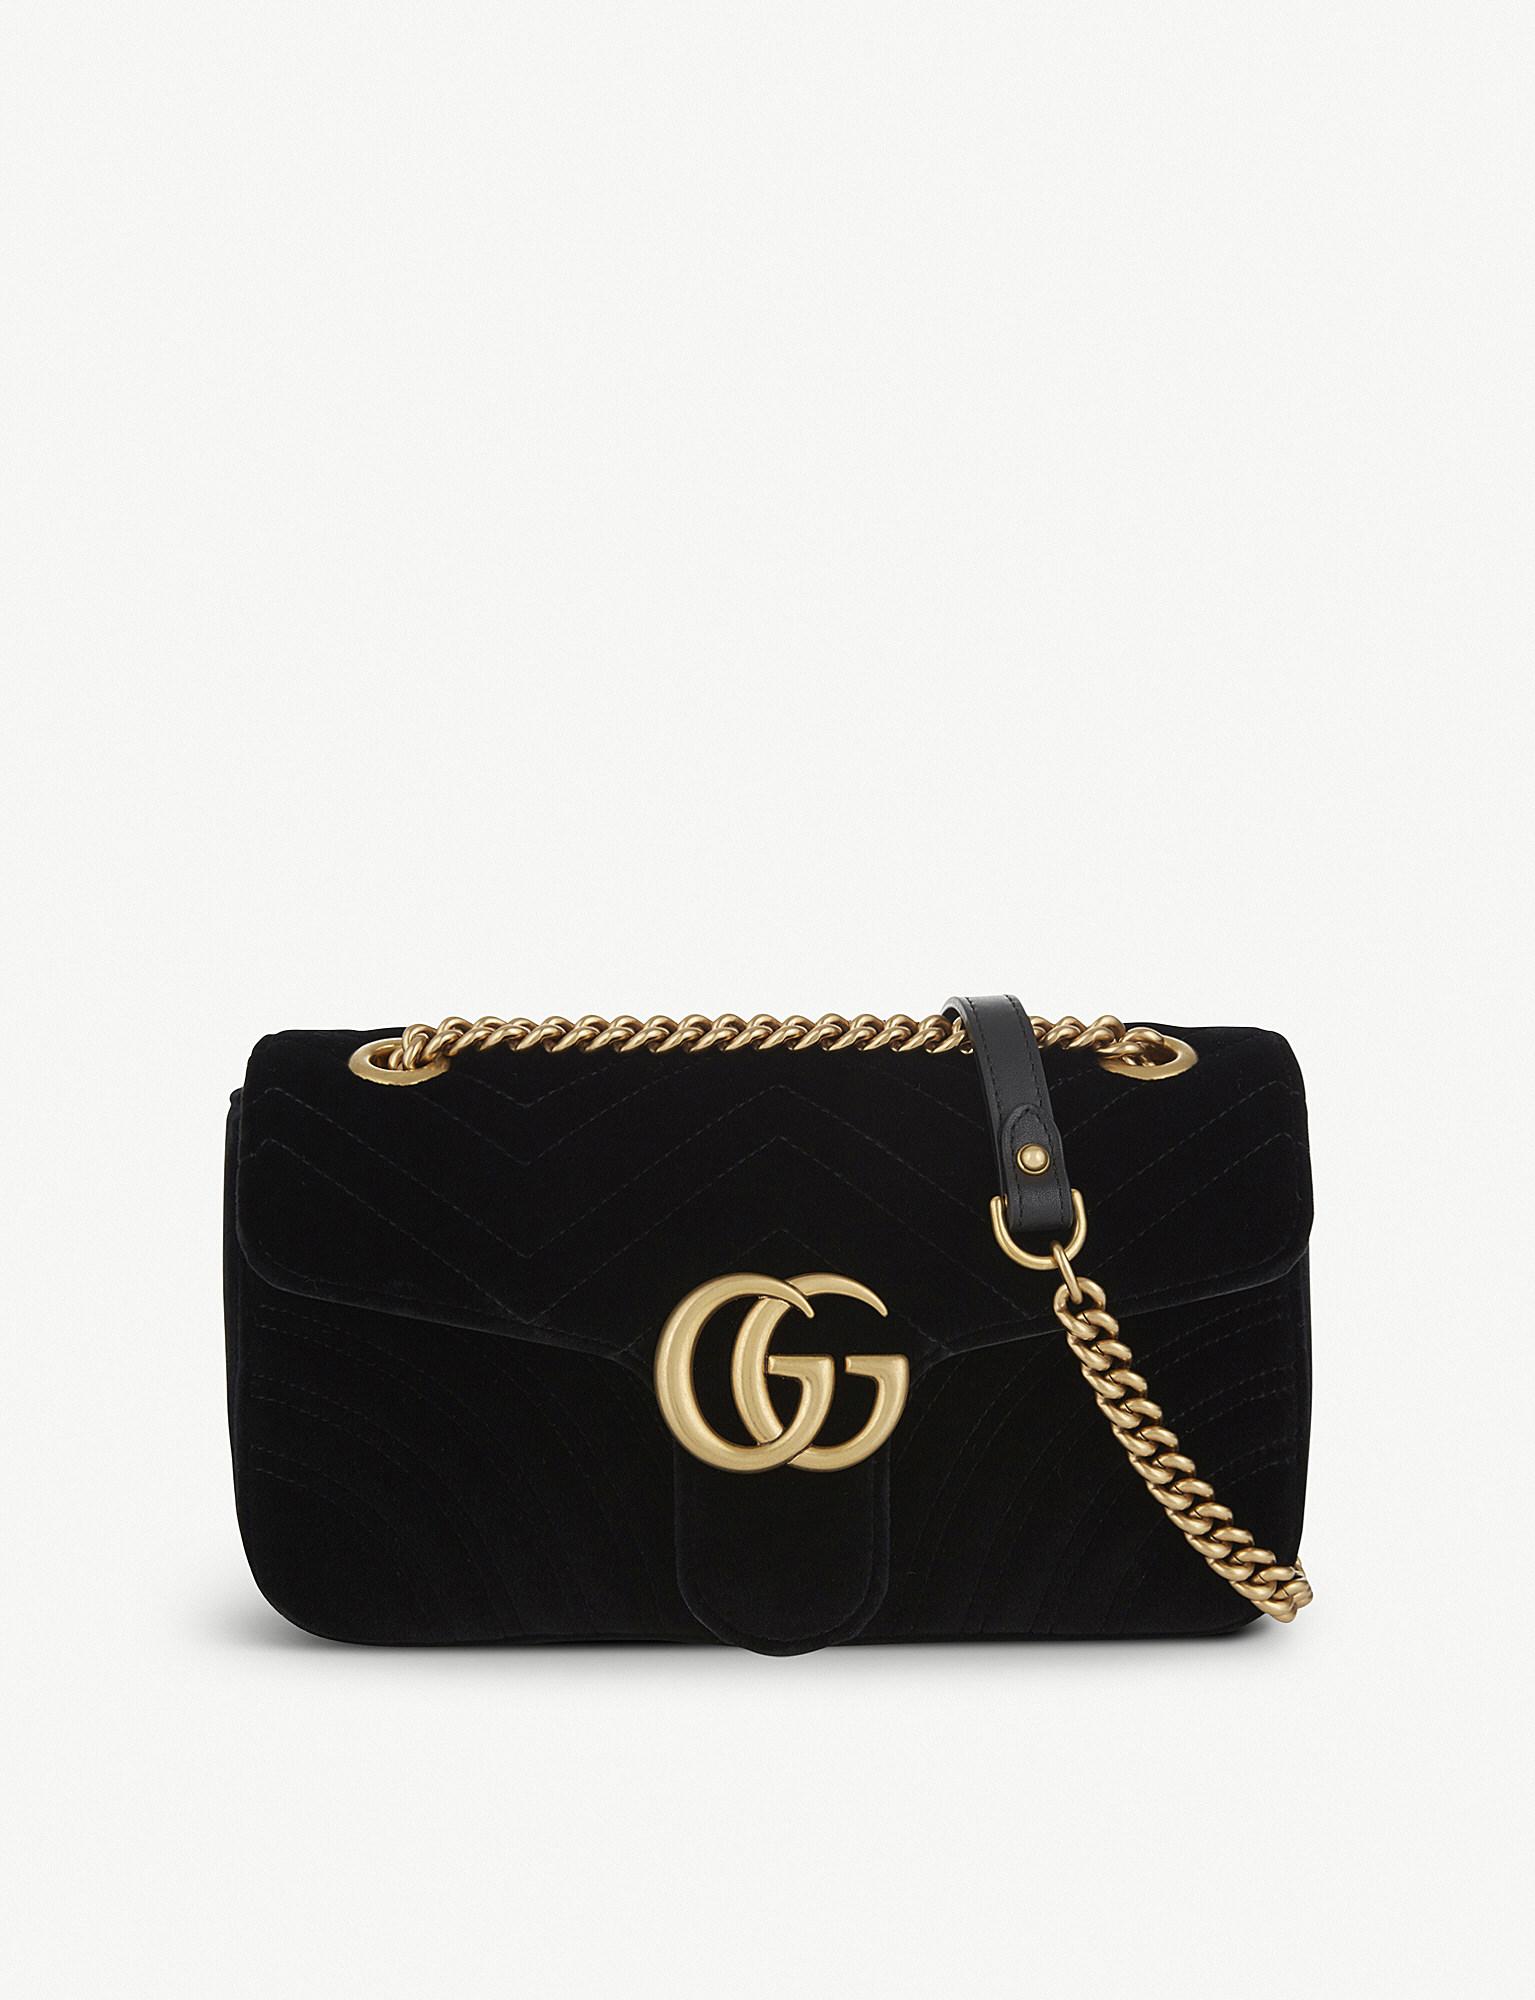 Lyst - Gucci GG Marmont Small Velvet Shoulder Bag in Black - Save 1.4450867052023142%